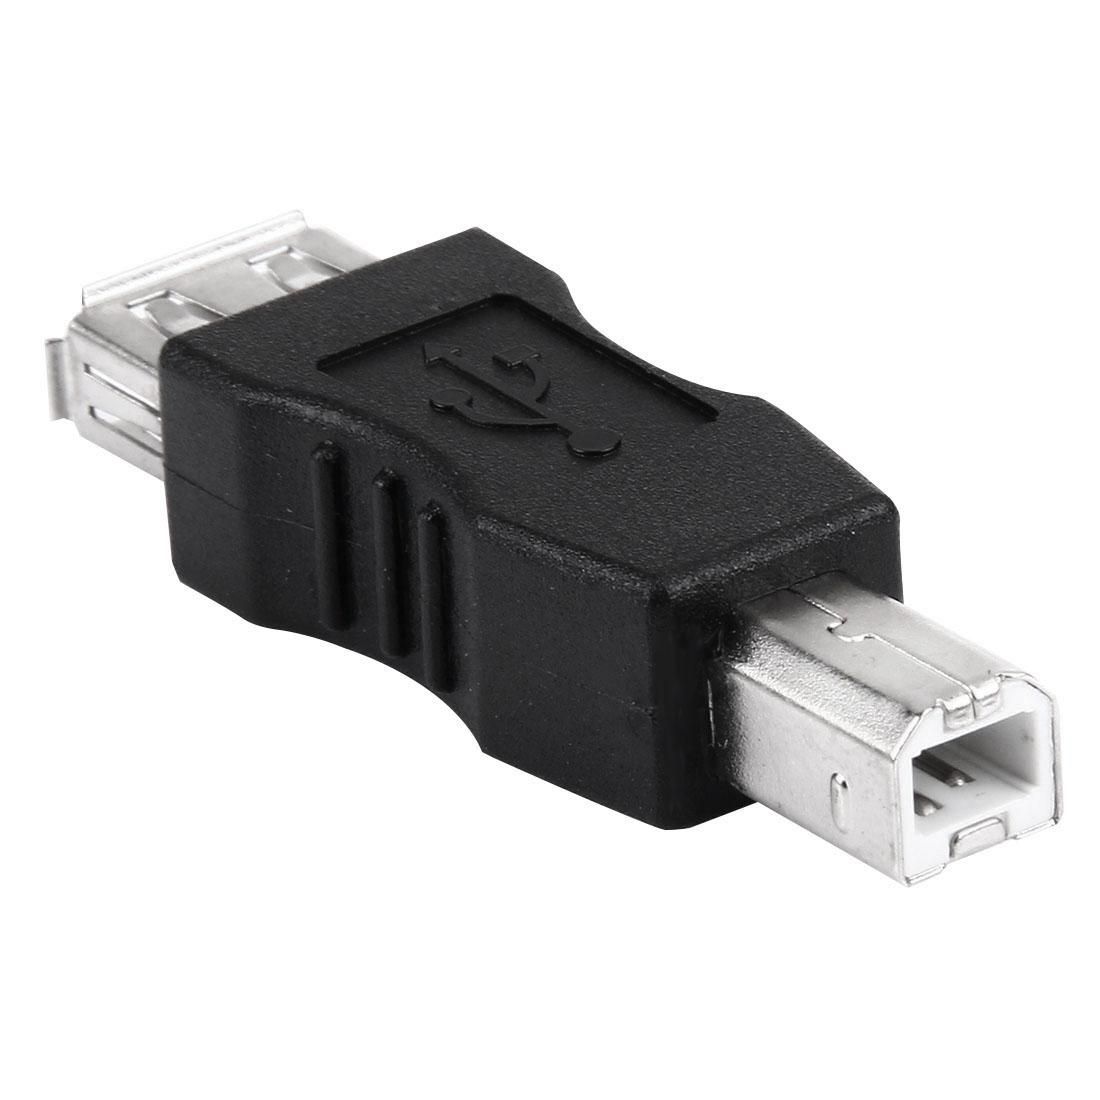 USB A female to B male Printer converter adapter (Black)